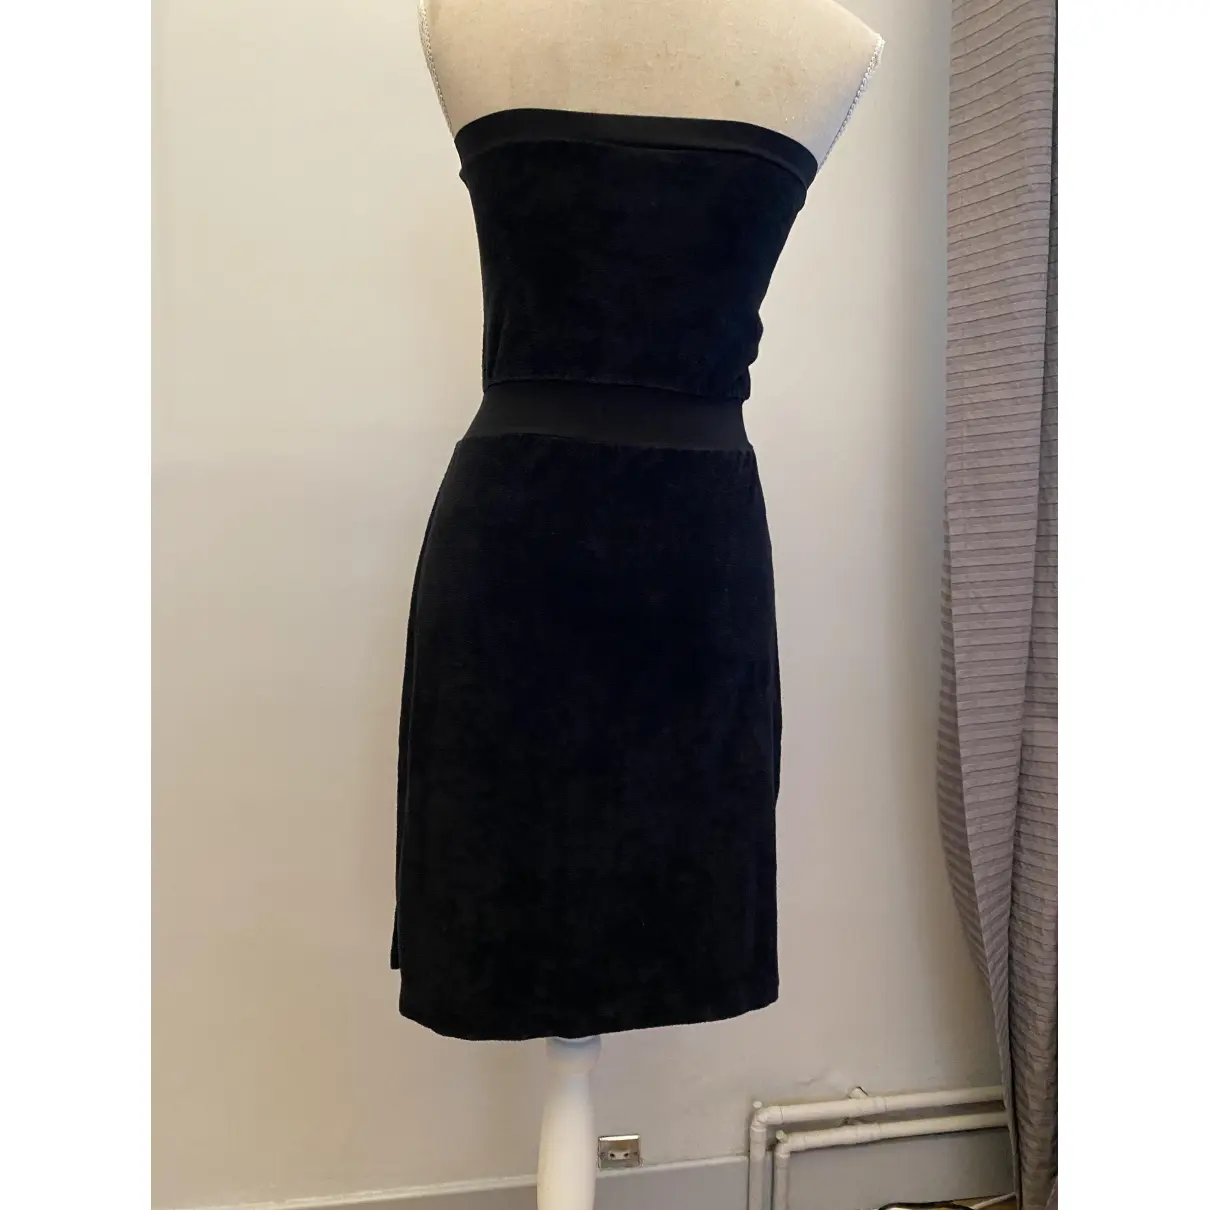 Buy American Apparel Mid-length dress online